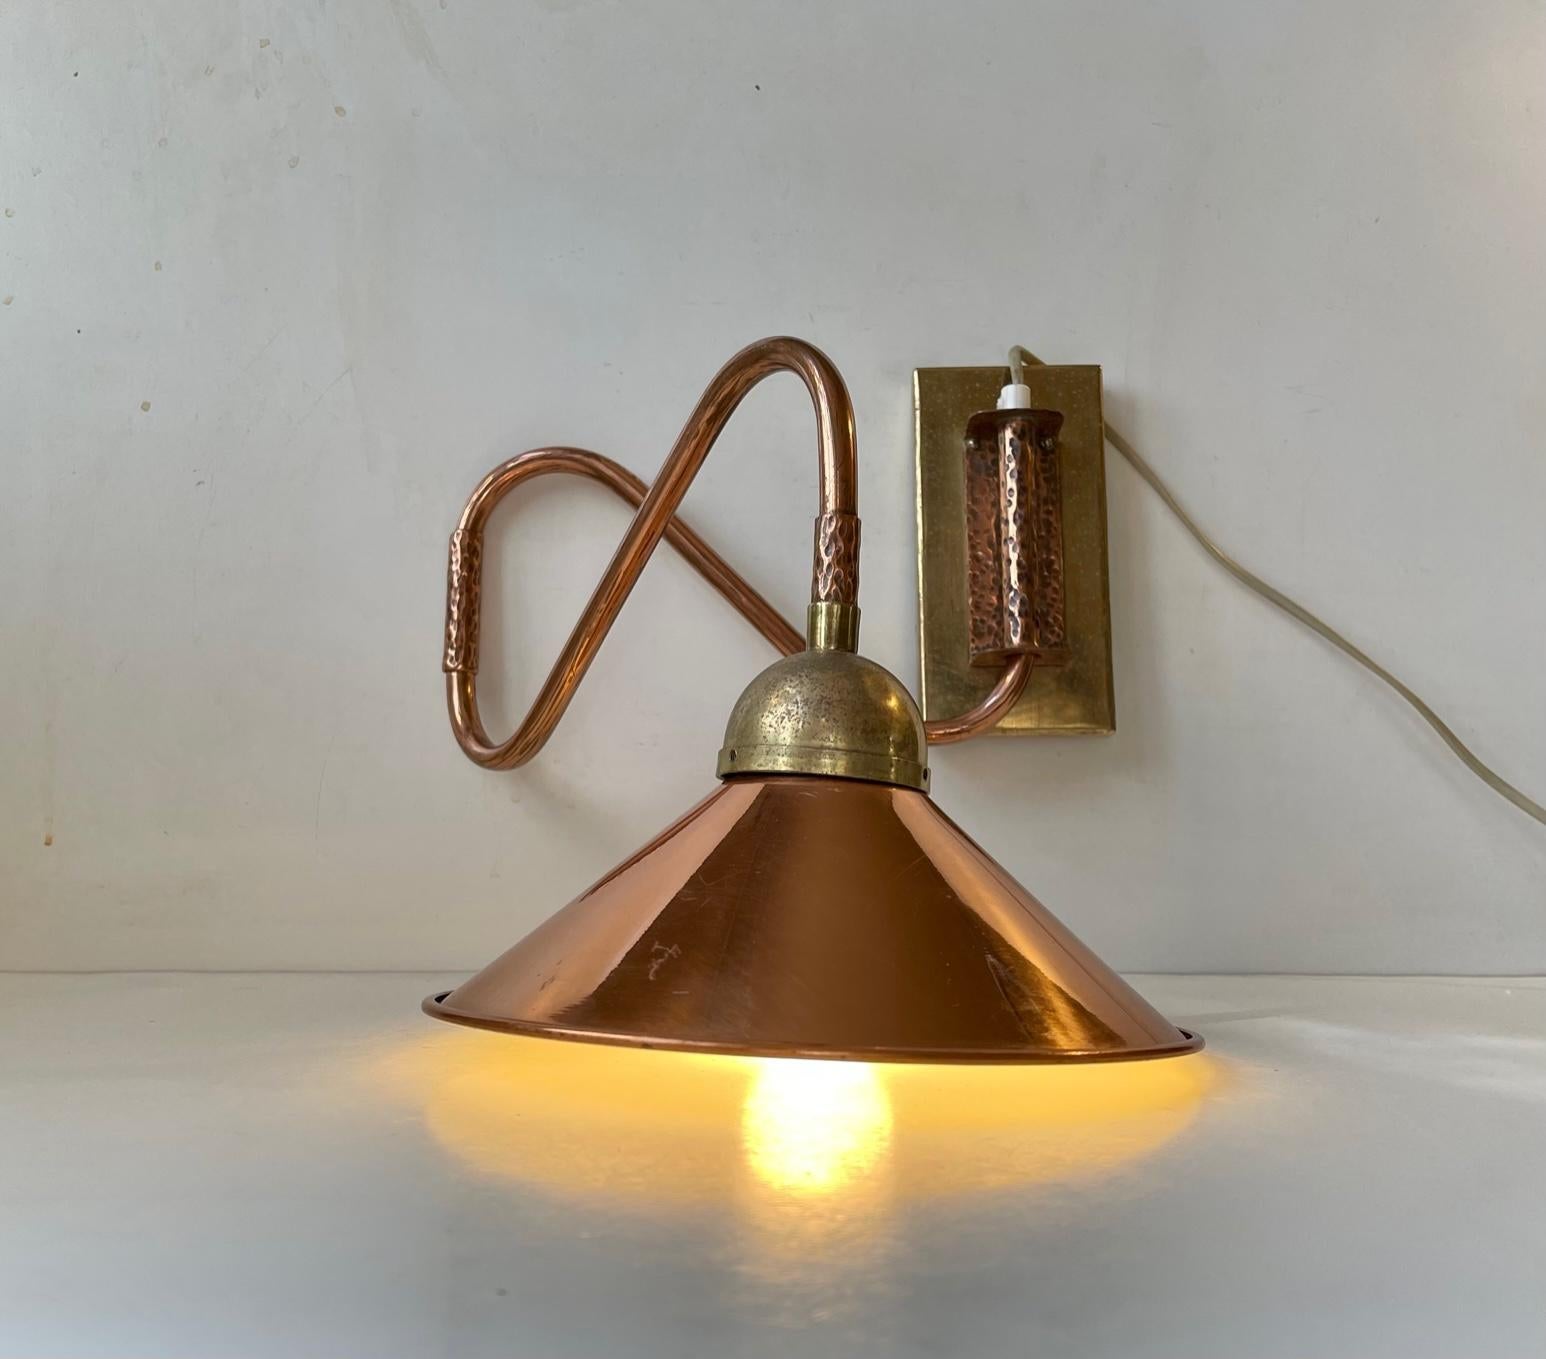 Scandinavian Modern Maritime Scandinavian Swing Arm Wall Lamp in Brass & Copper, 1970s